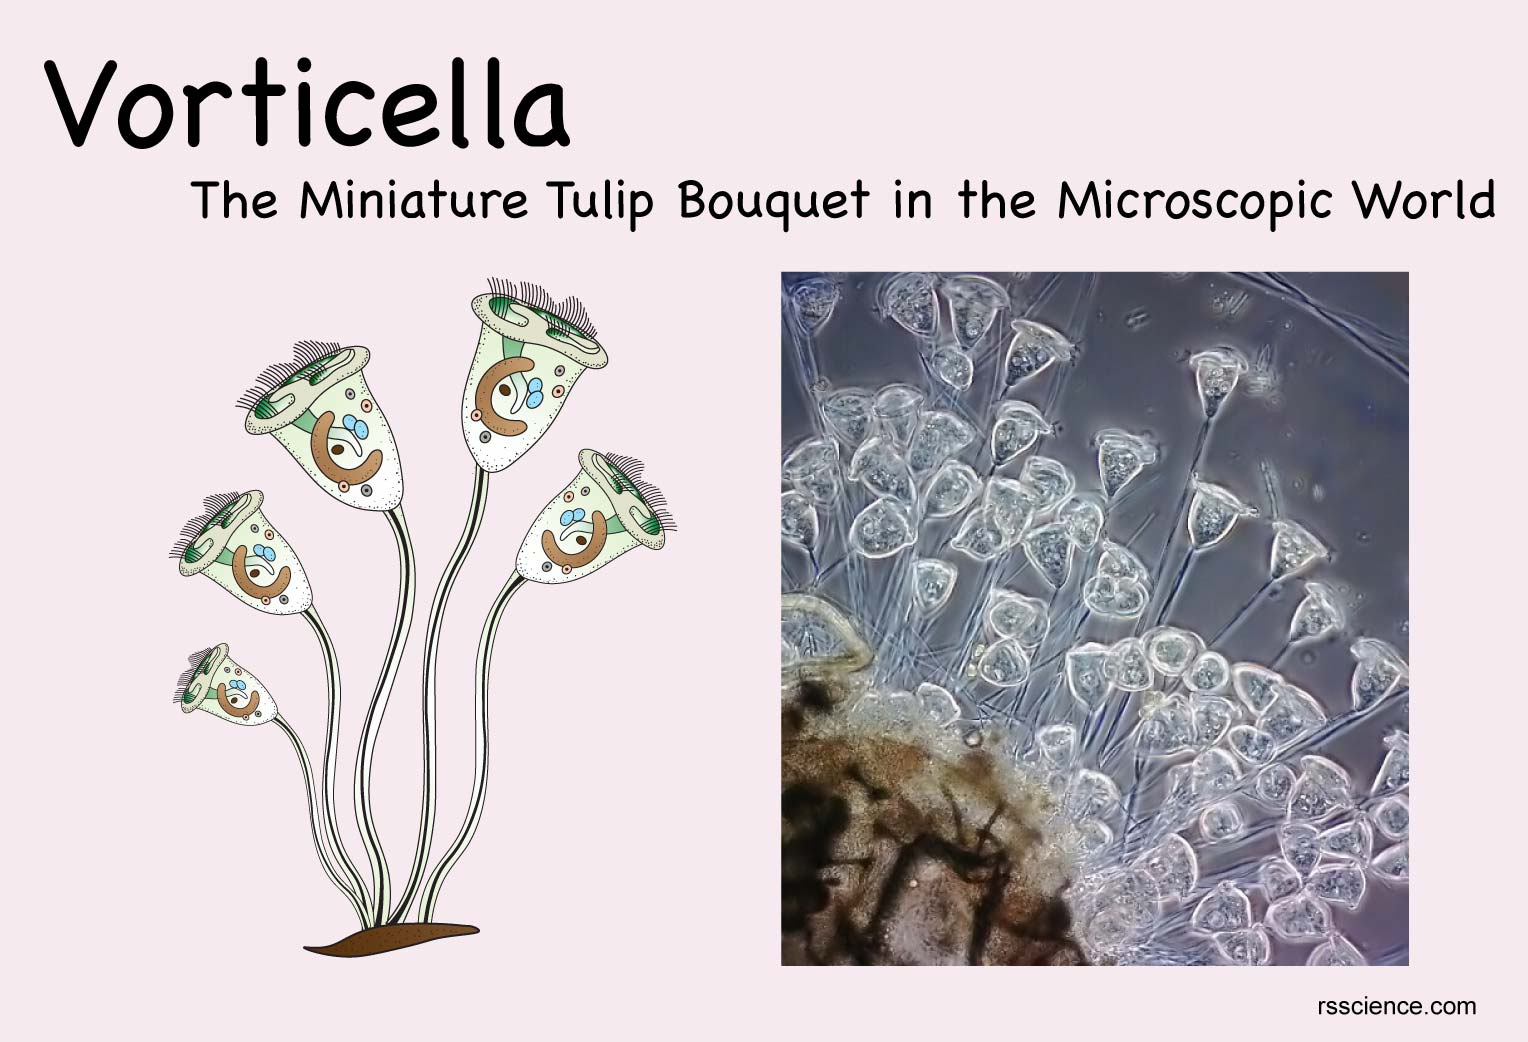 vorticella labeled nucleus